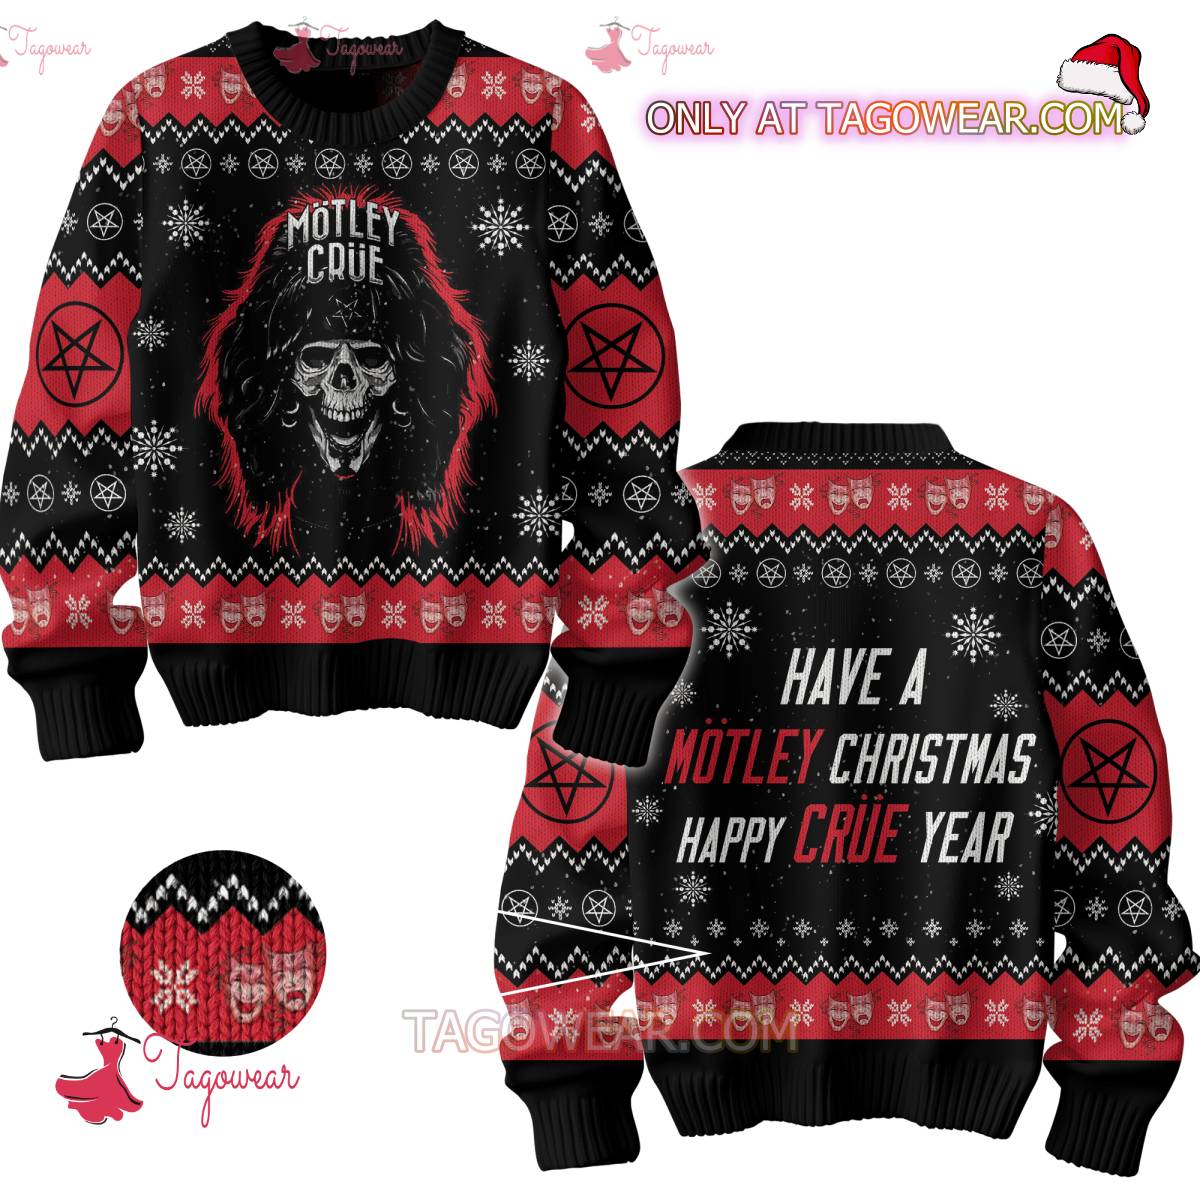 Motley Crue Have A Motley Christmas Happy Crue Year Ugly Christmas Sweater